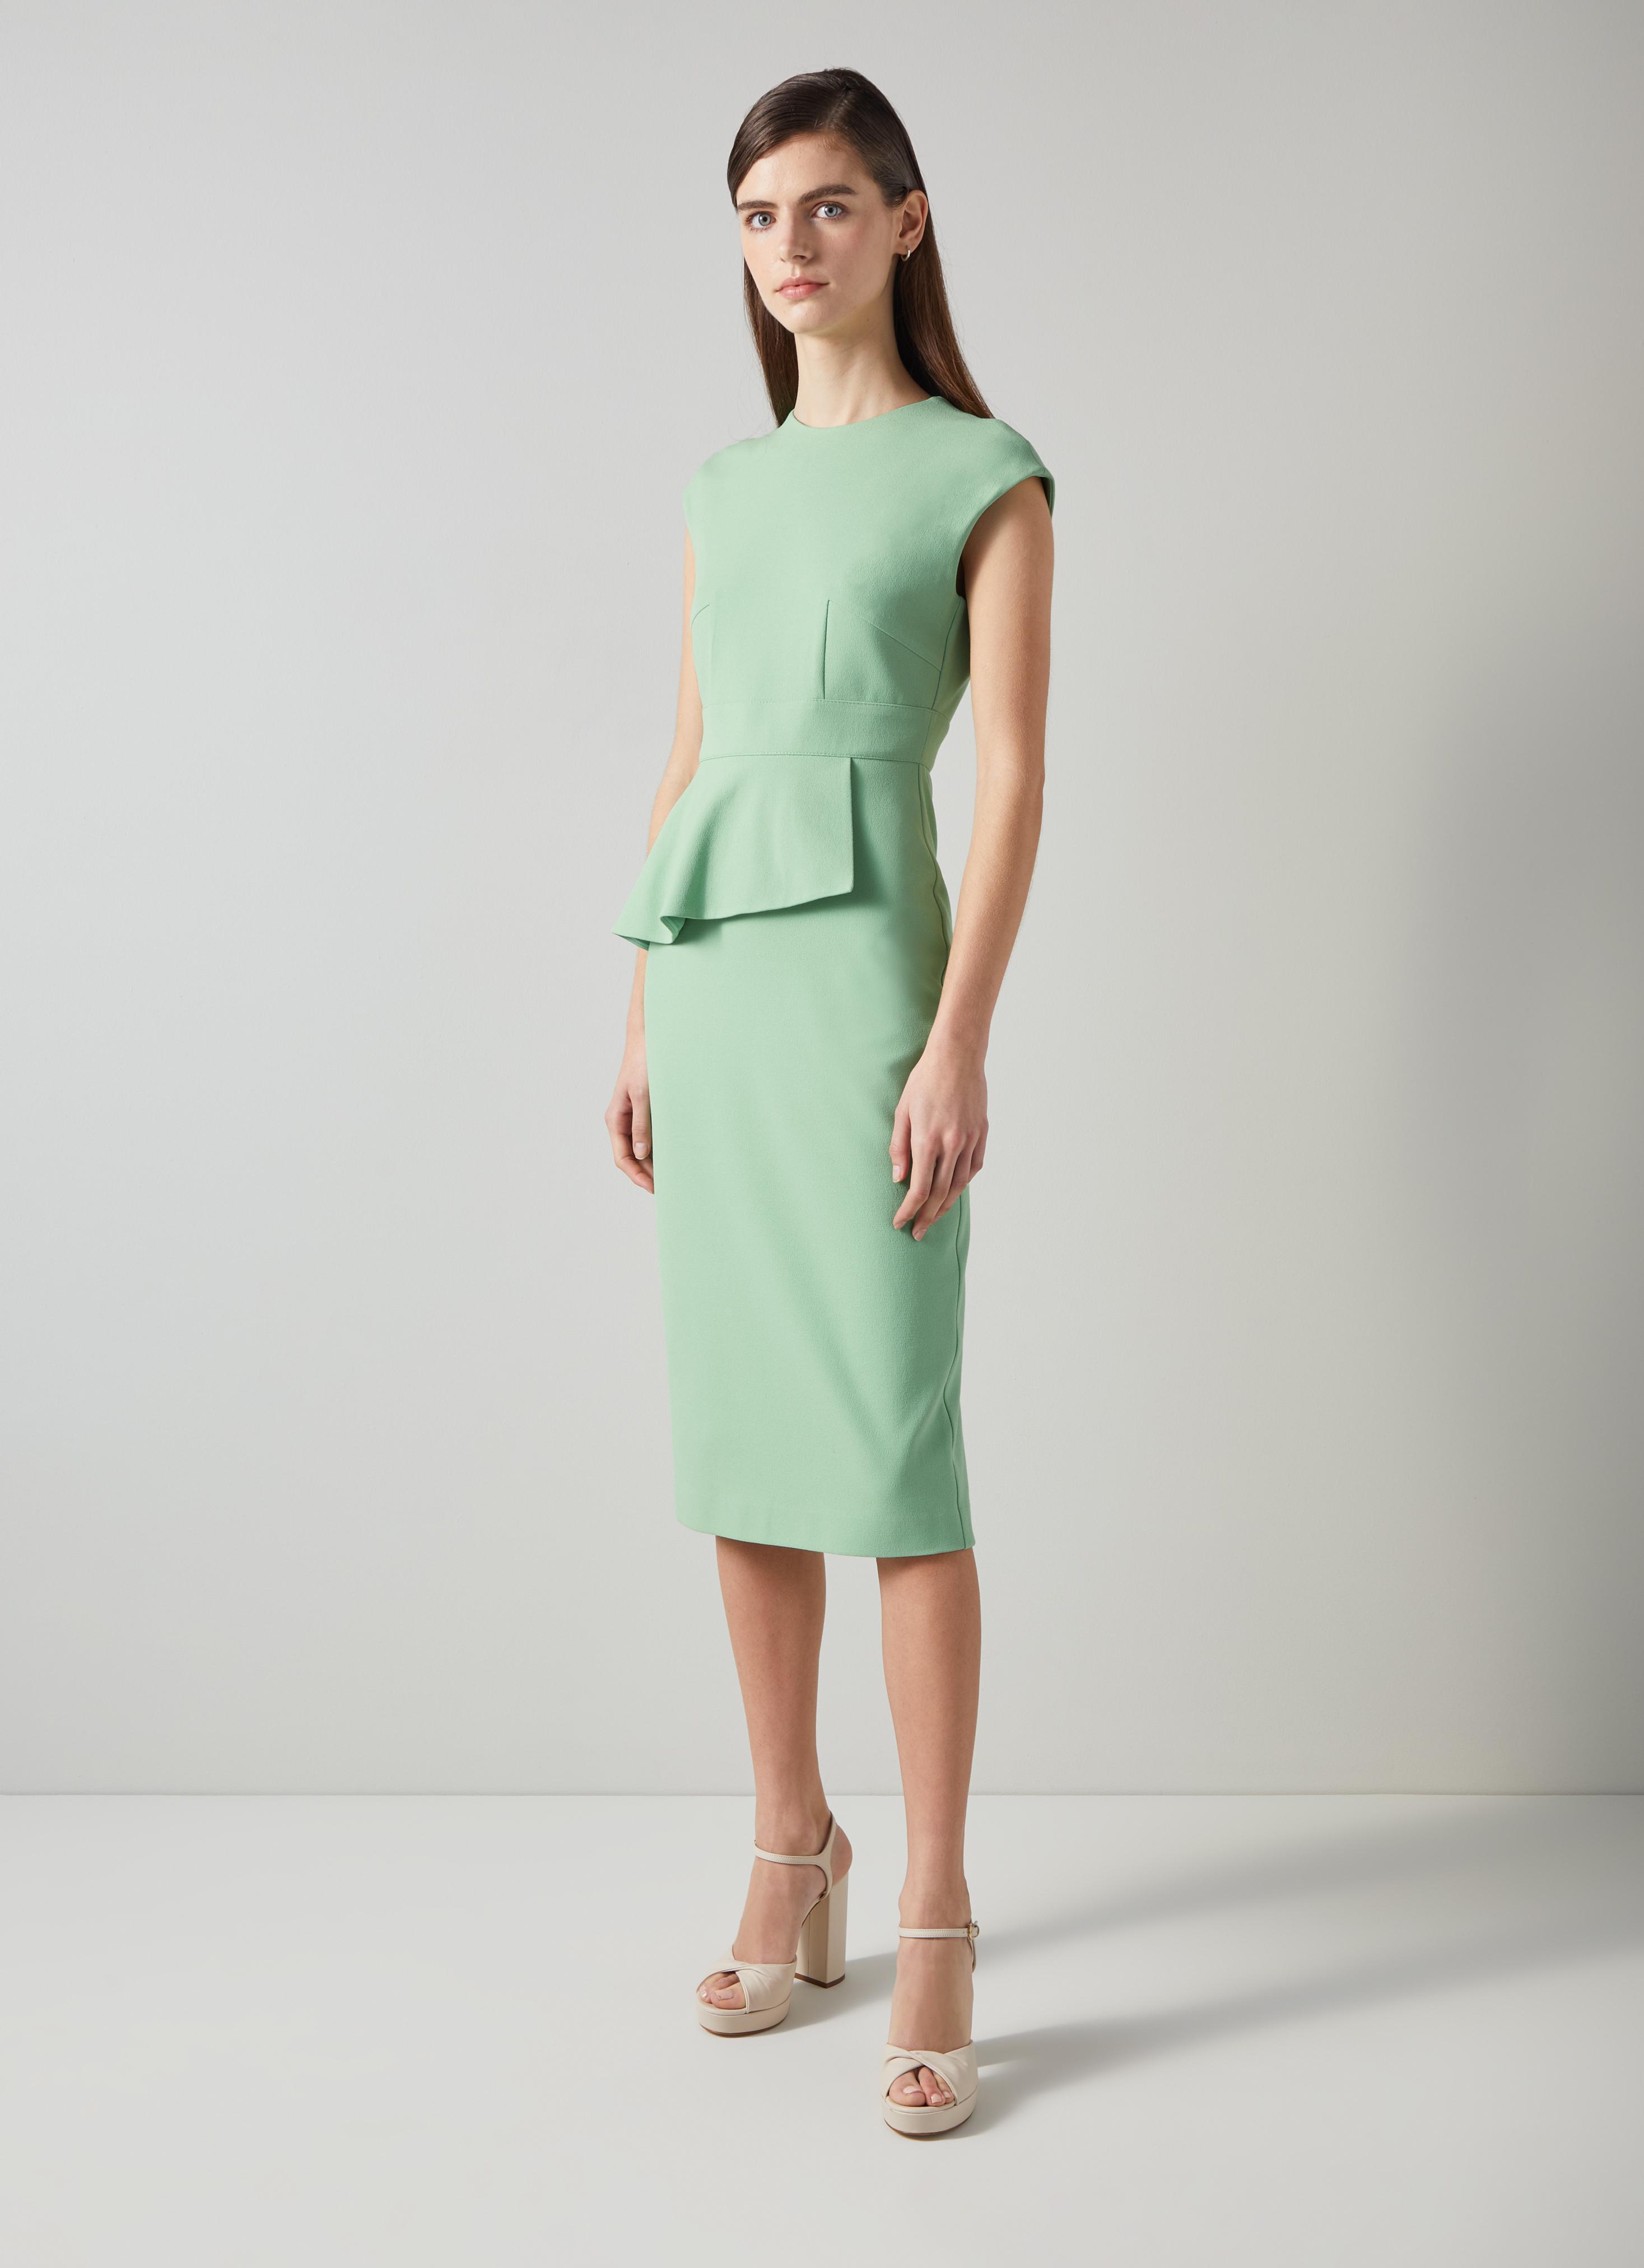 Mia Green Dress with LENZING ECOVERO viscose, Green